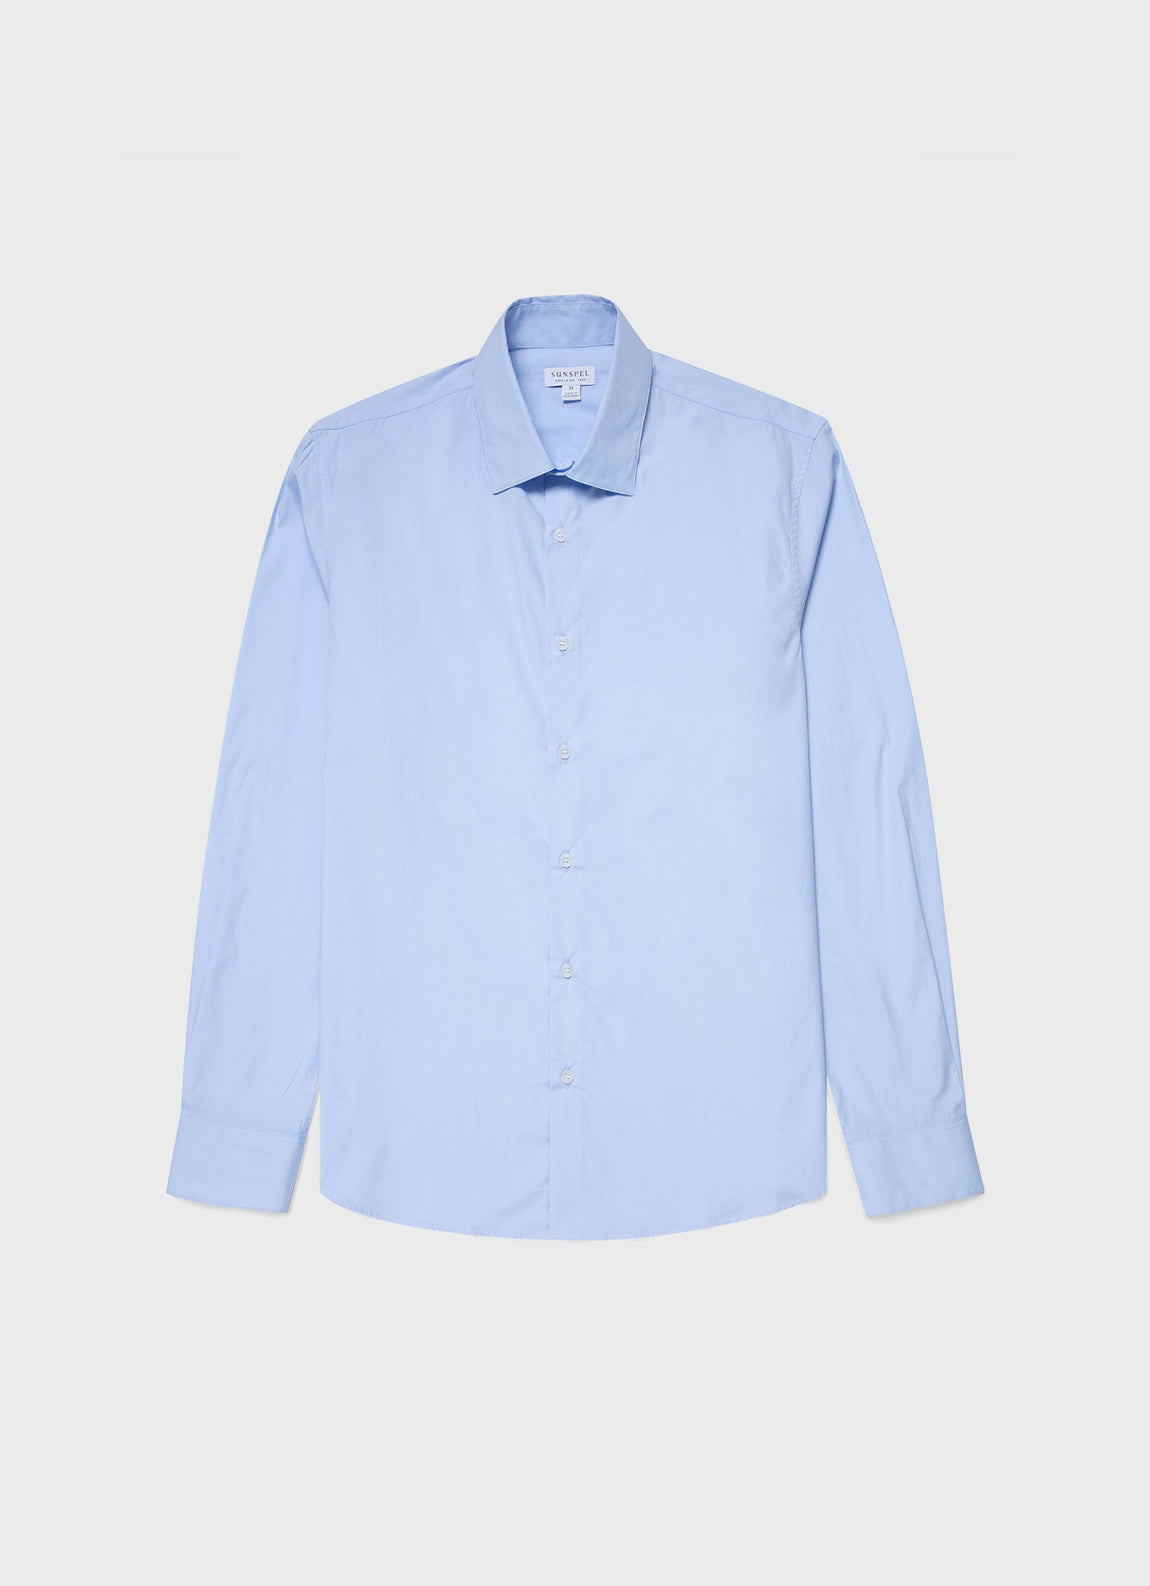 Men's Cotton Stretch Shirt in Light Blue